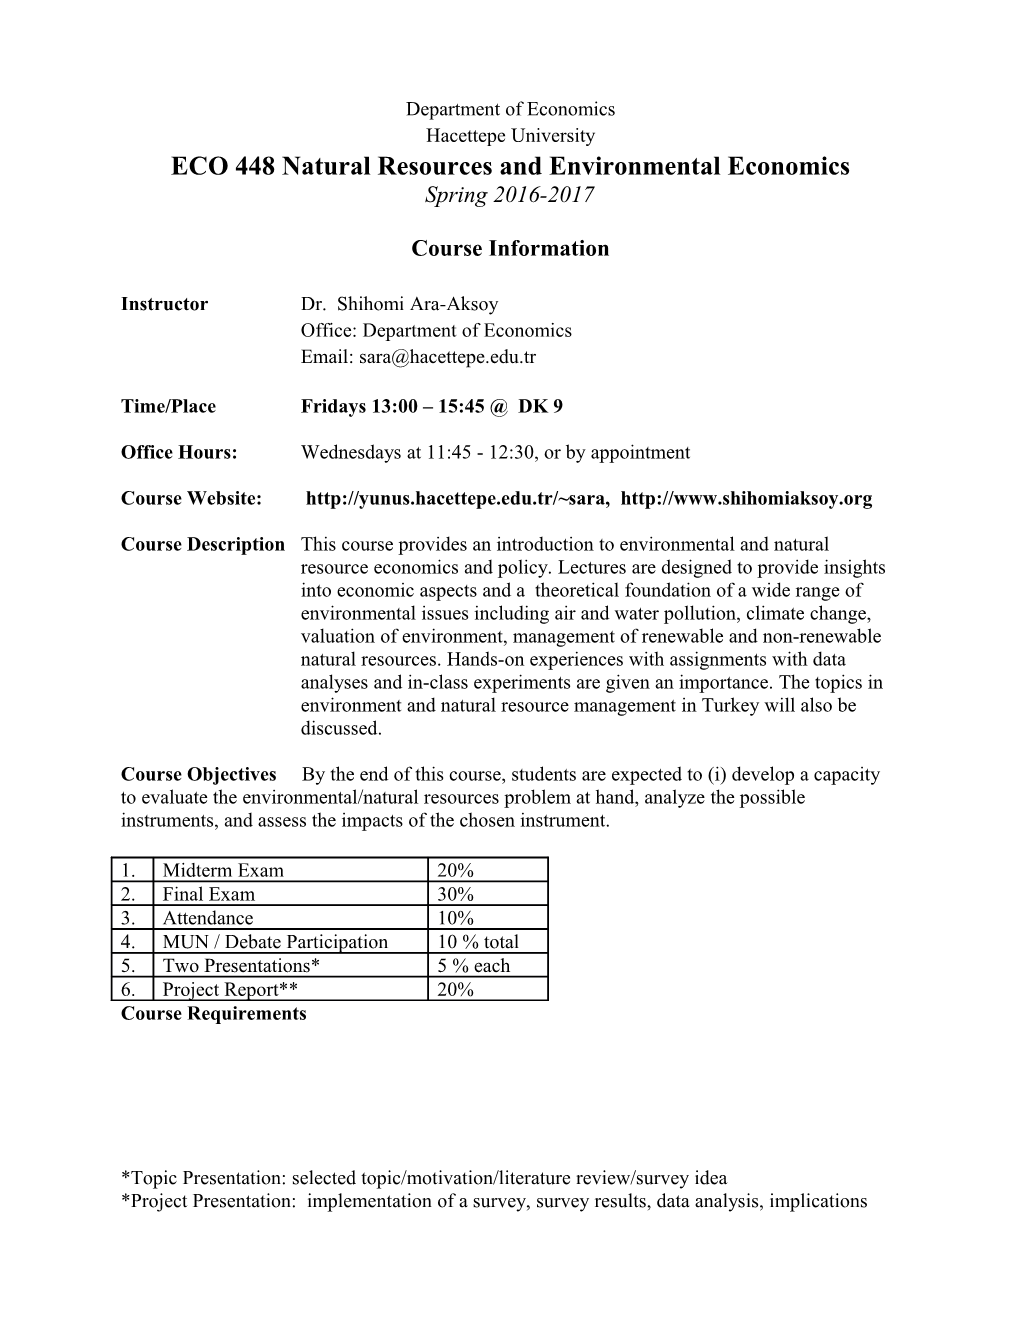 ECO 448 Natural Resources and Environmental Economics